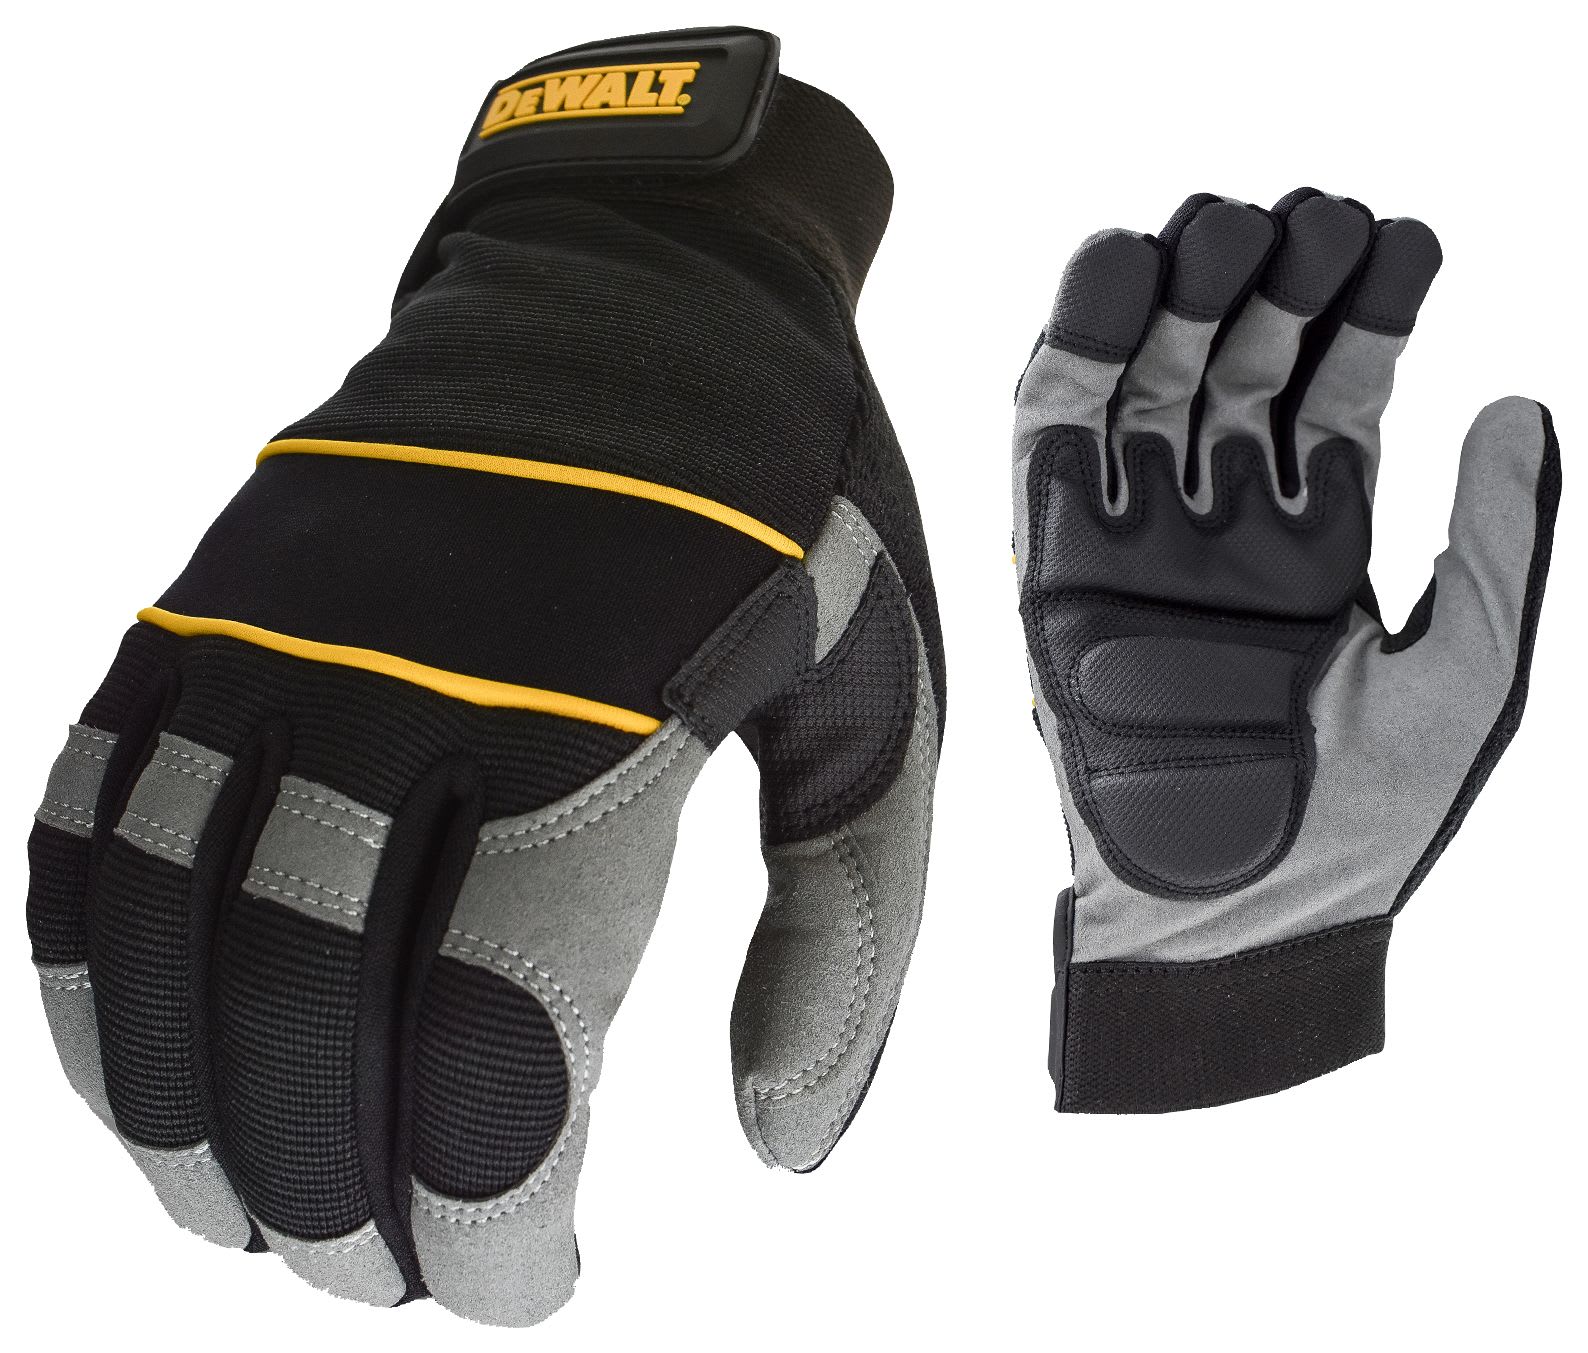 DEWALT DPG33L Power Tool Performance Glove Black -